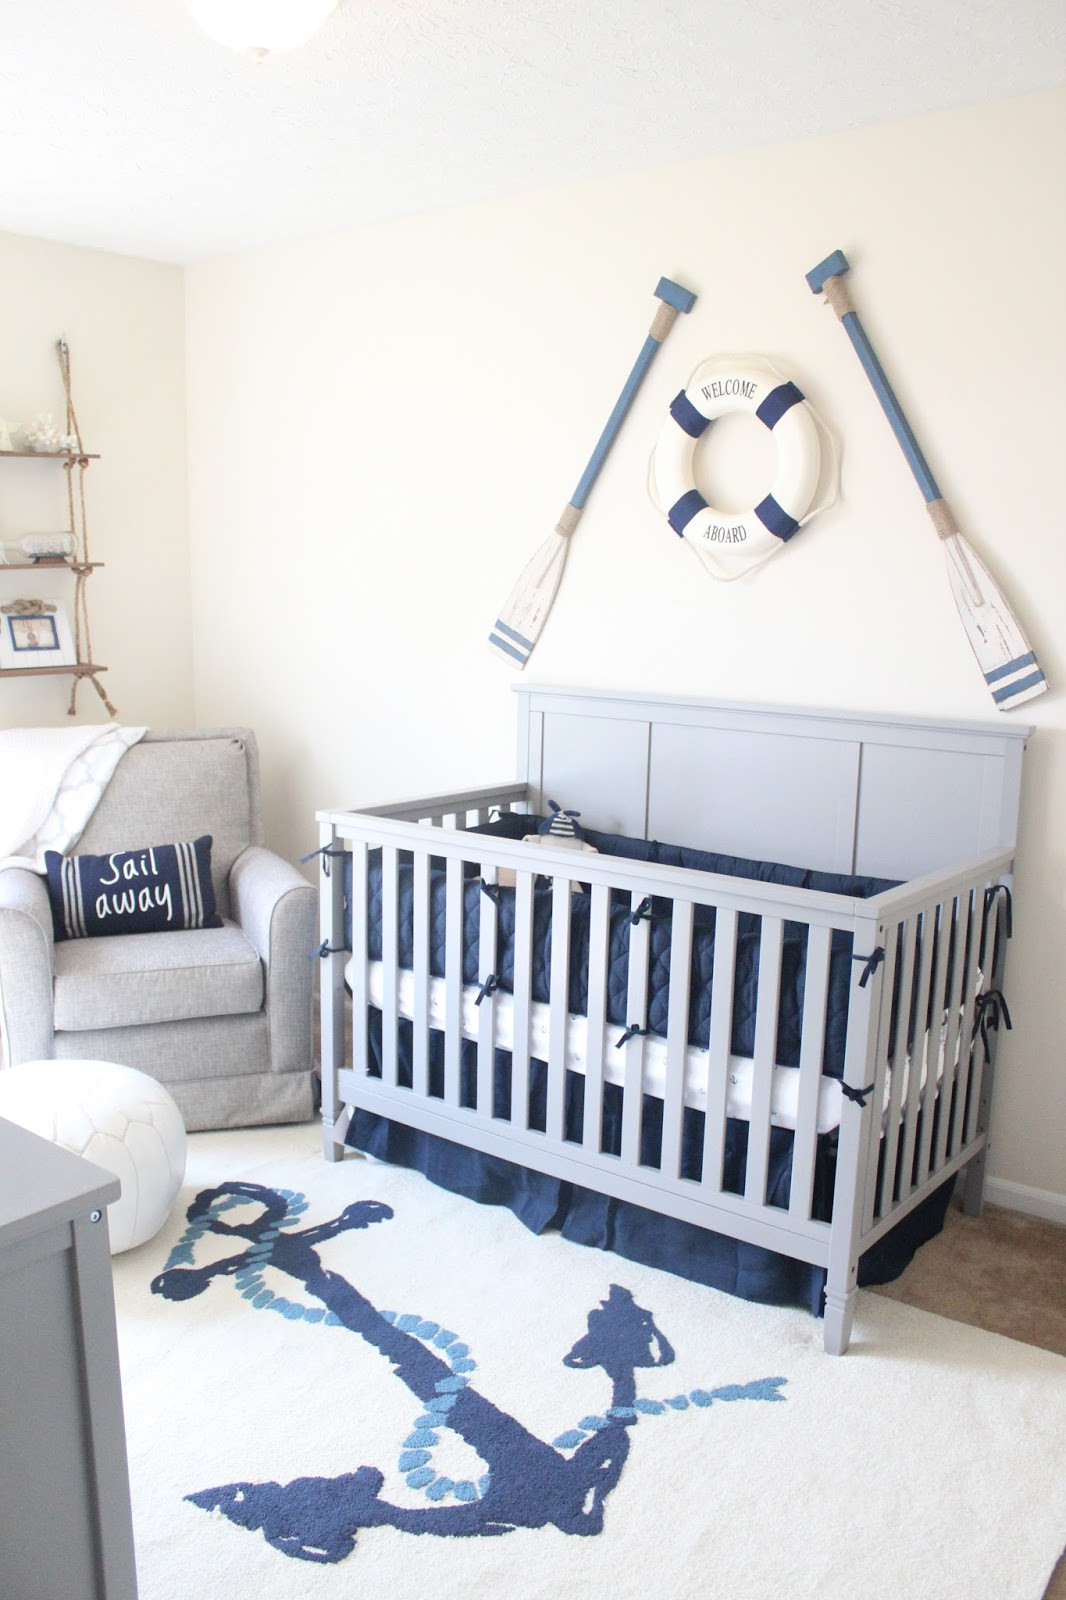 Nautical Decor For Baby Room
 KEEP CALM AND CARRY ON Baby 2 s Nautical Nursery